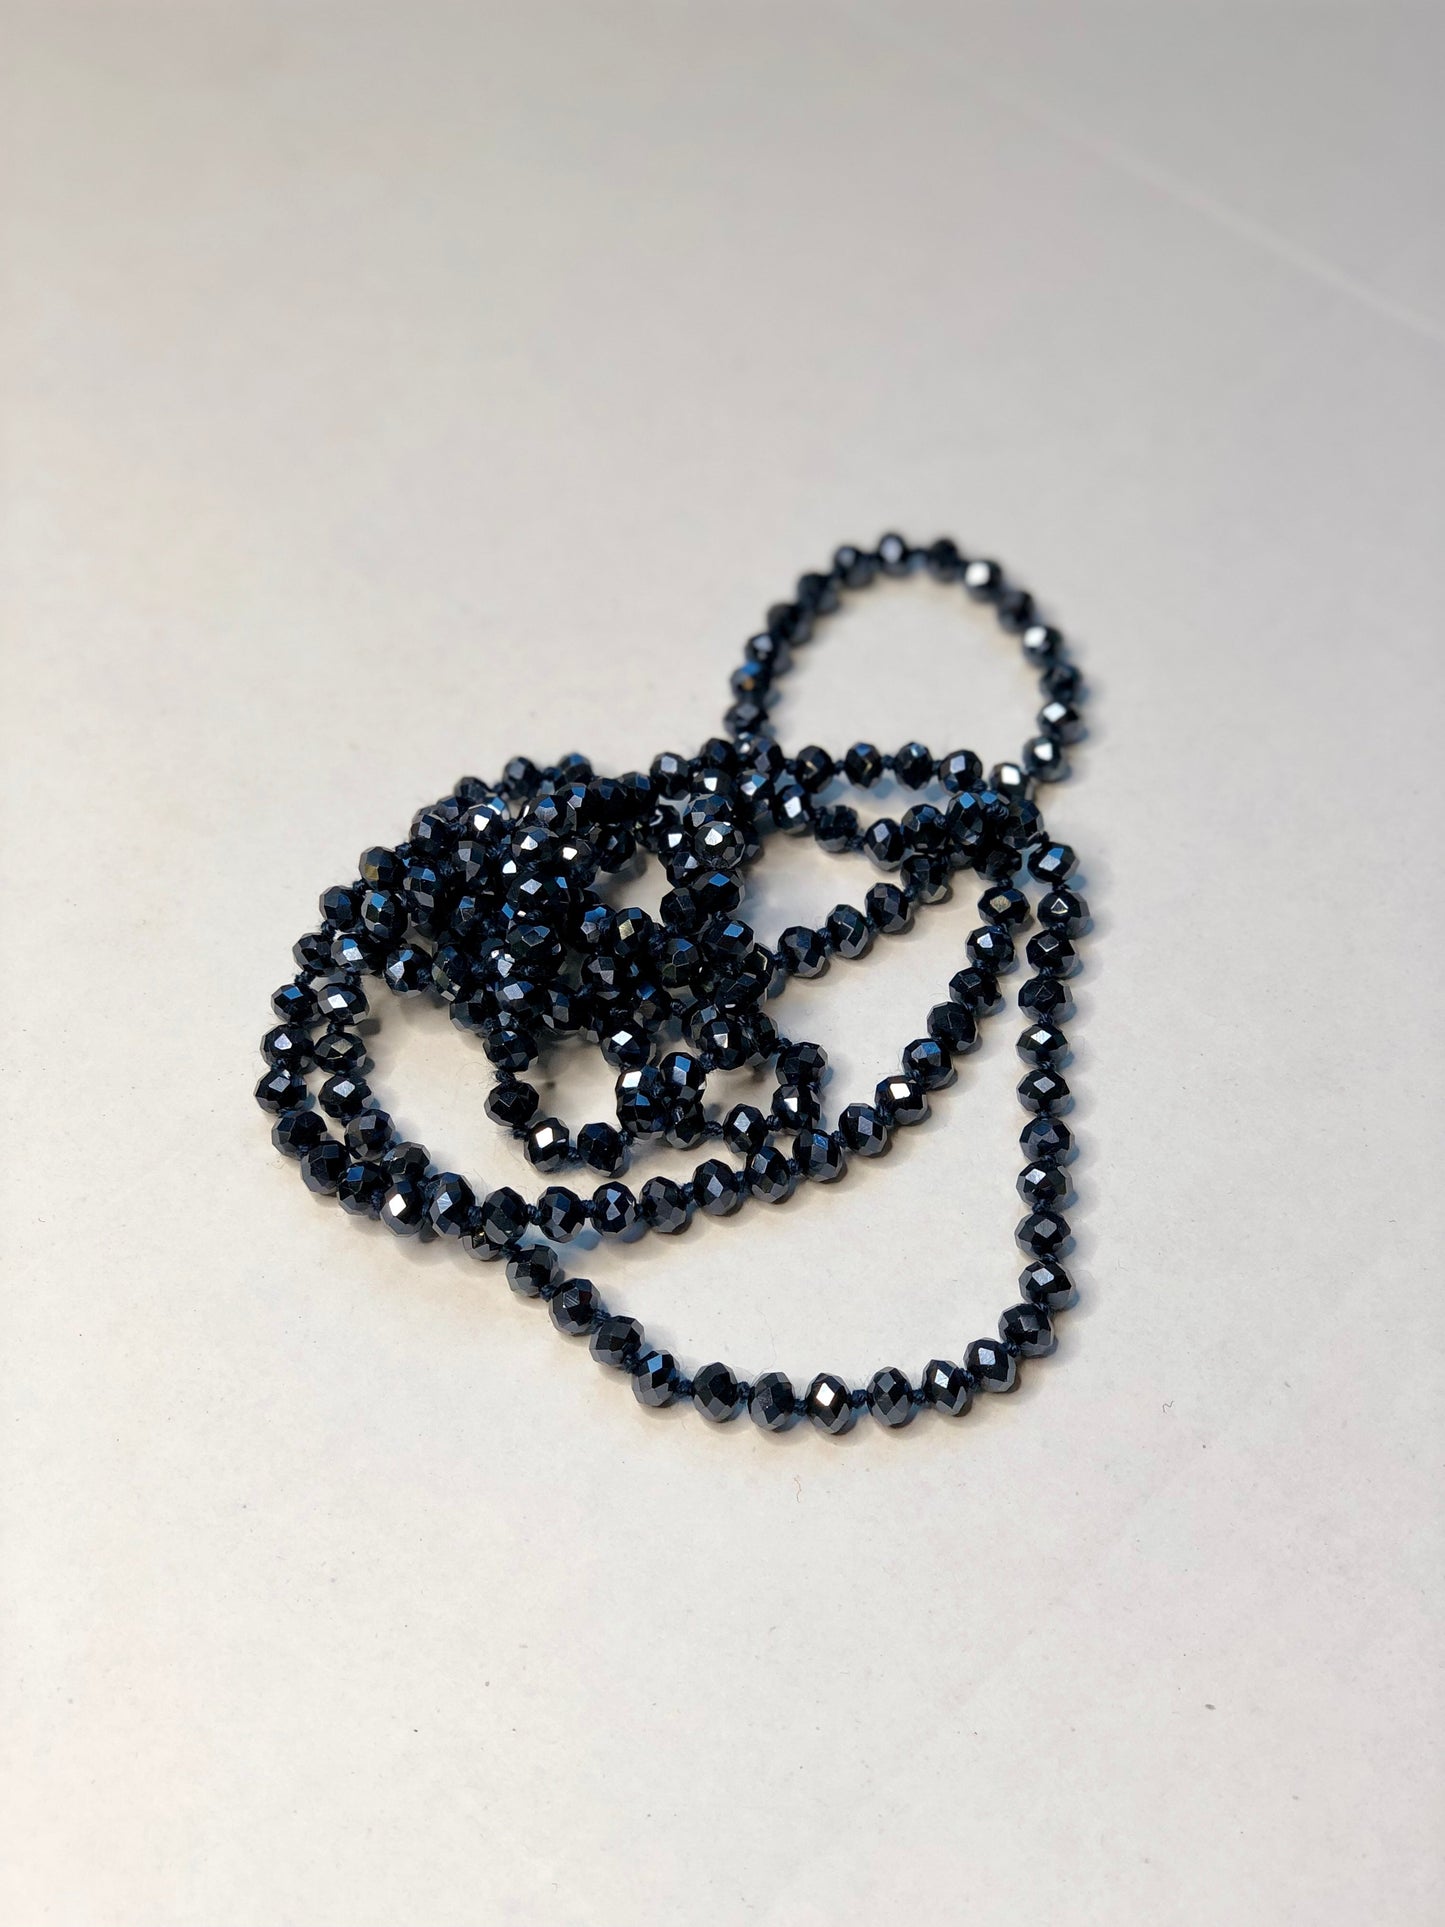 RESTOCK of Basic Beads